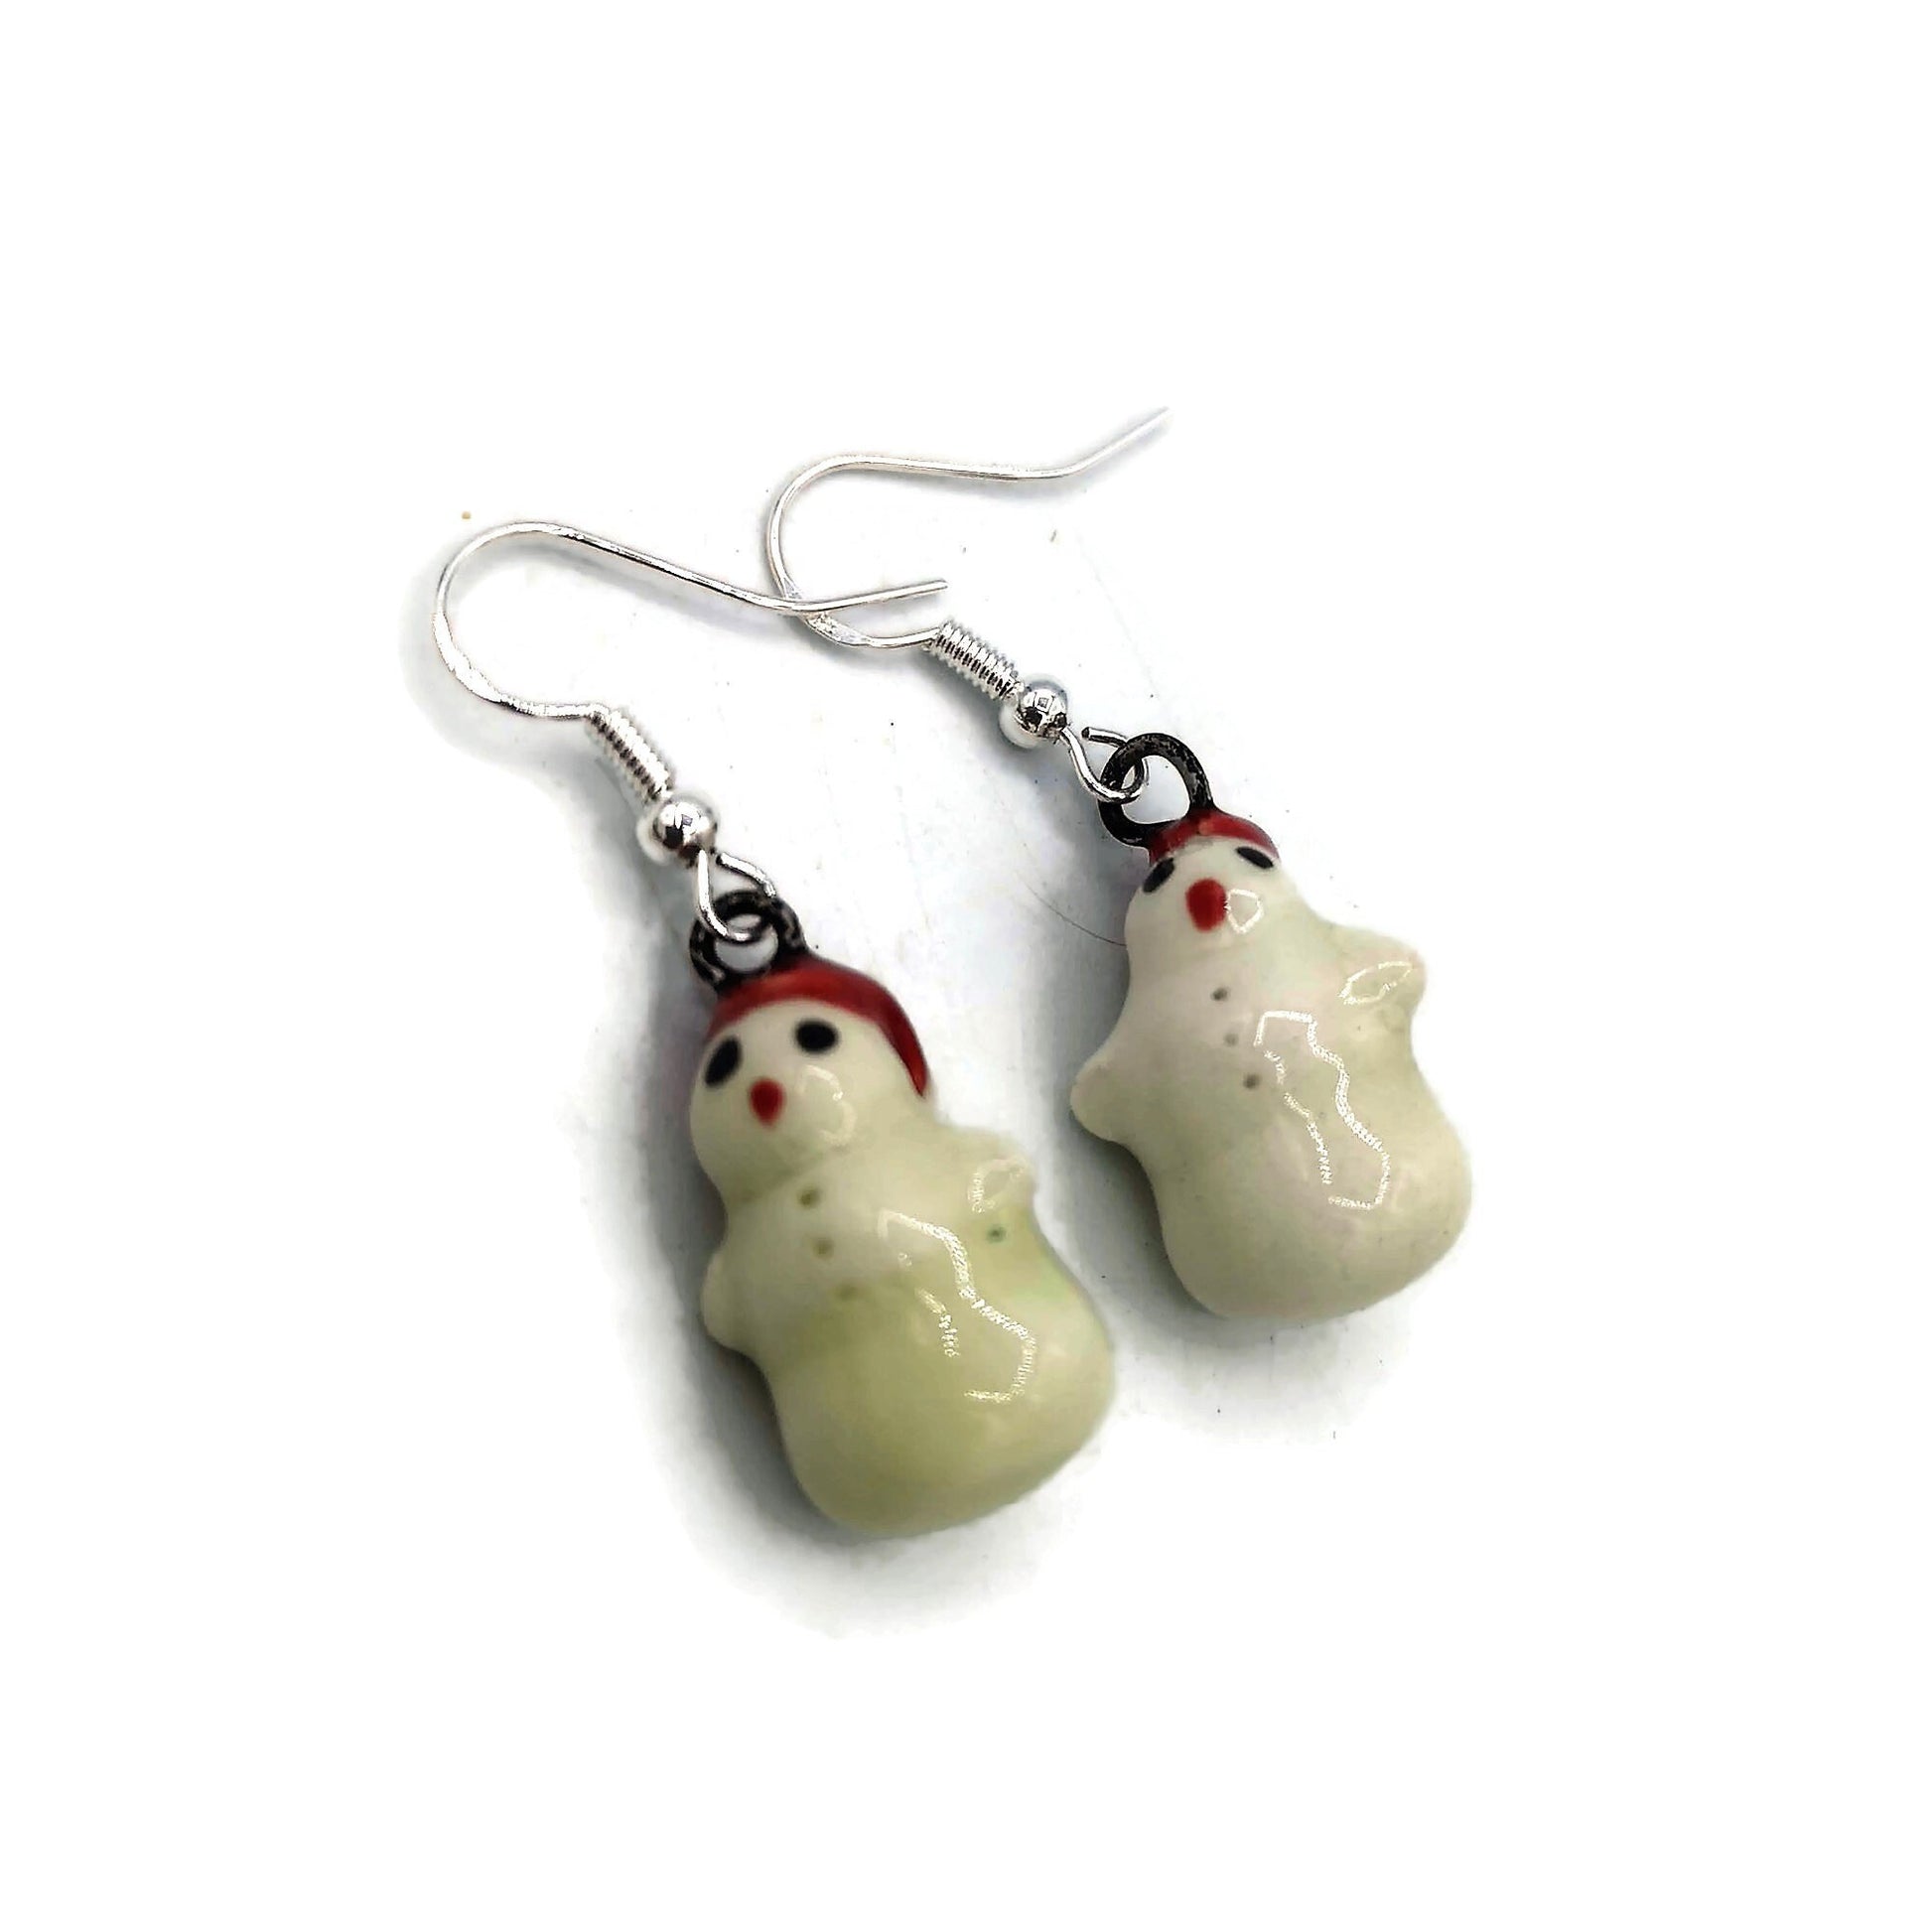 Handmade Ceramic Snowman Earrings, Cool Dangle Earrings, Cute Jewelry Best Gift For Her, Niece Gift From Aunt, Christmas Earrings, Clay - Ceramica Ana Rafael